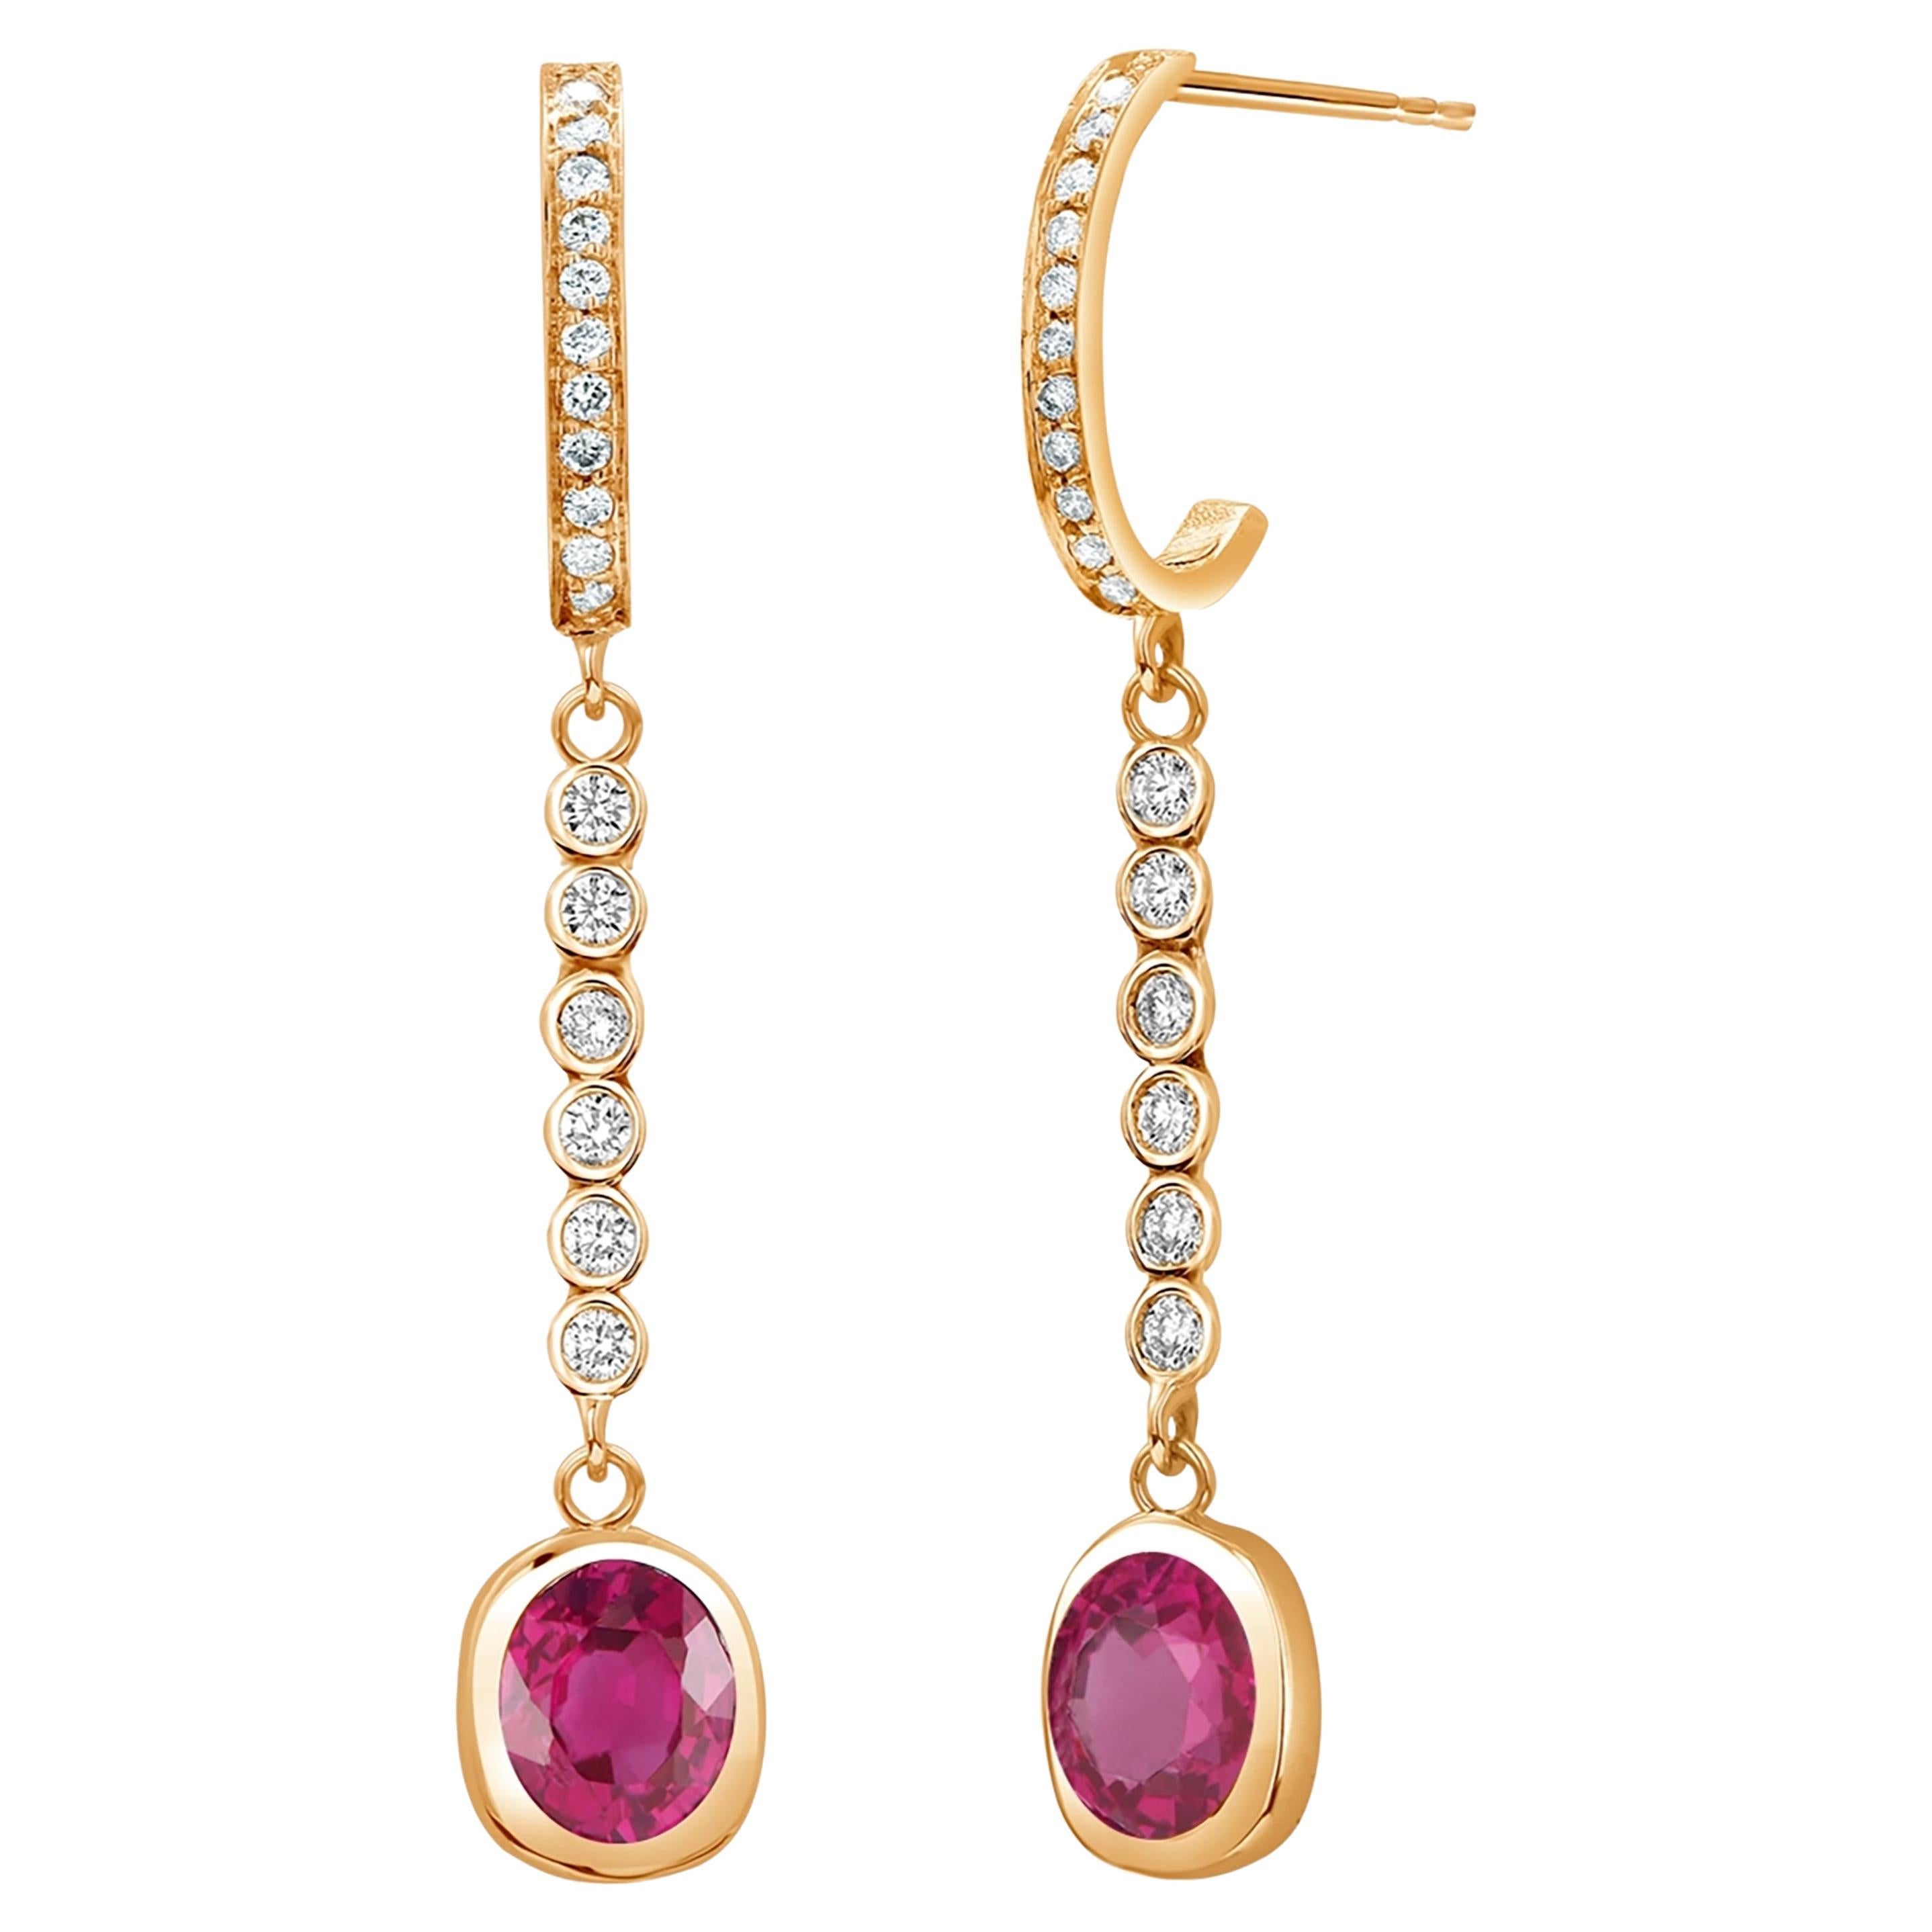 Bezel Set Burma Ruby Diamond 1.75 Carat 1.6 Inch Long Yellow Gold Earrings